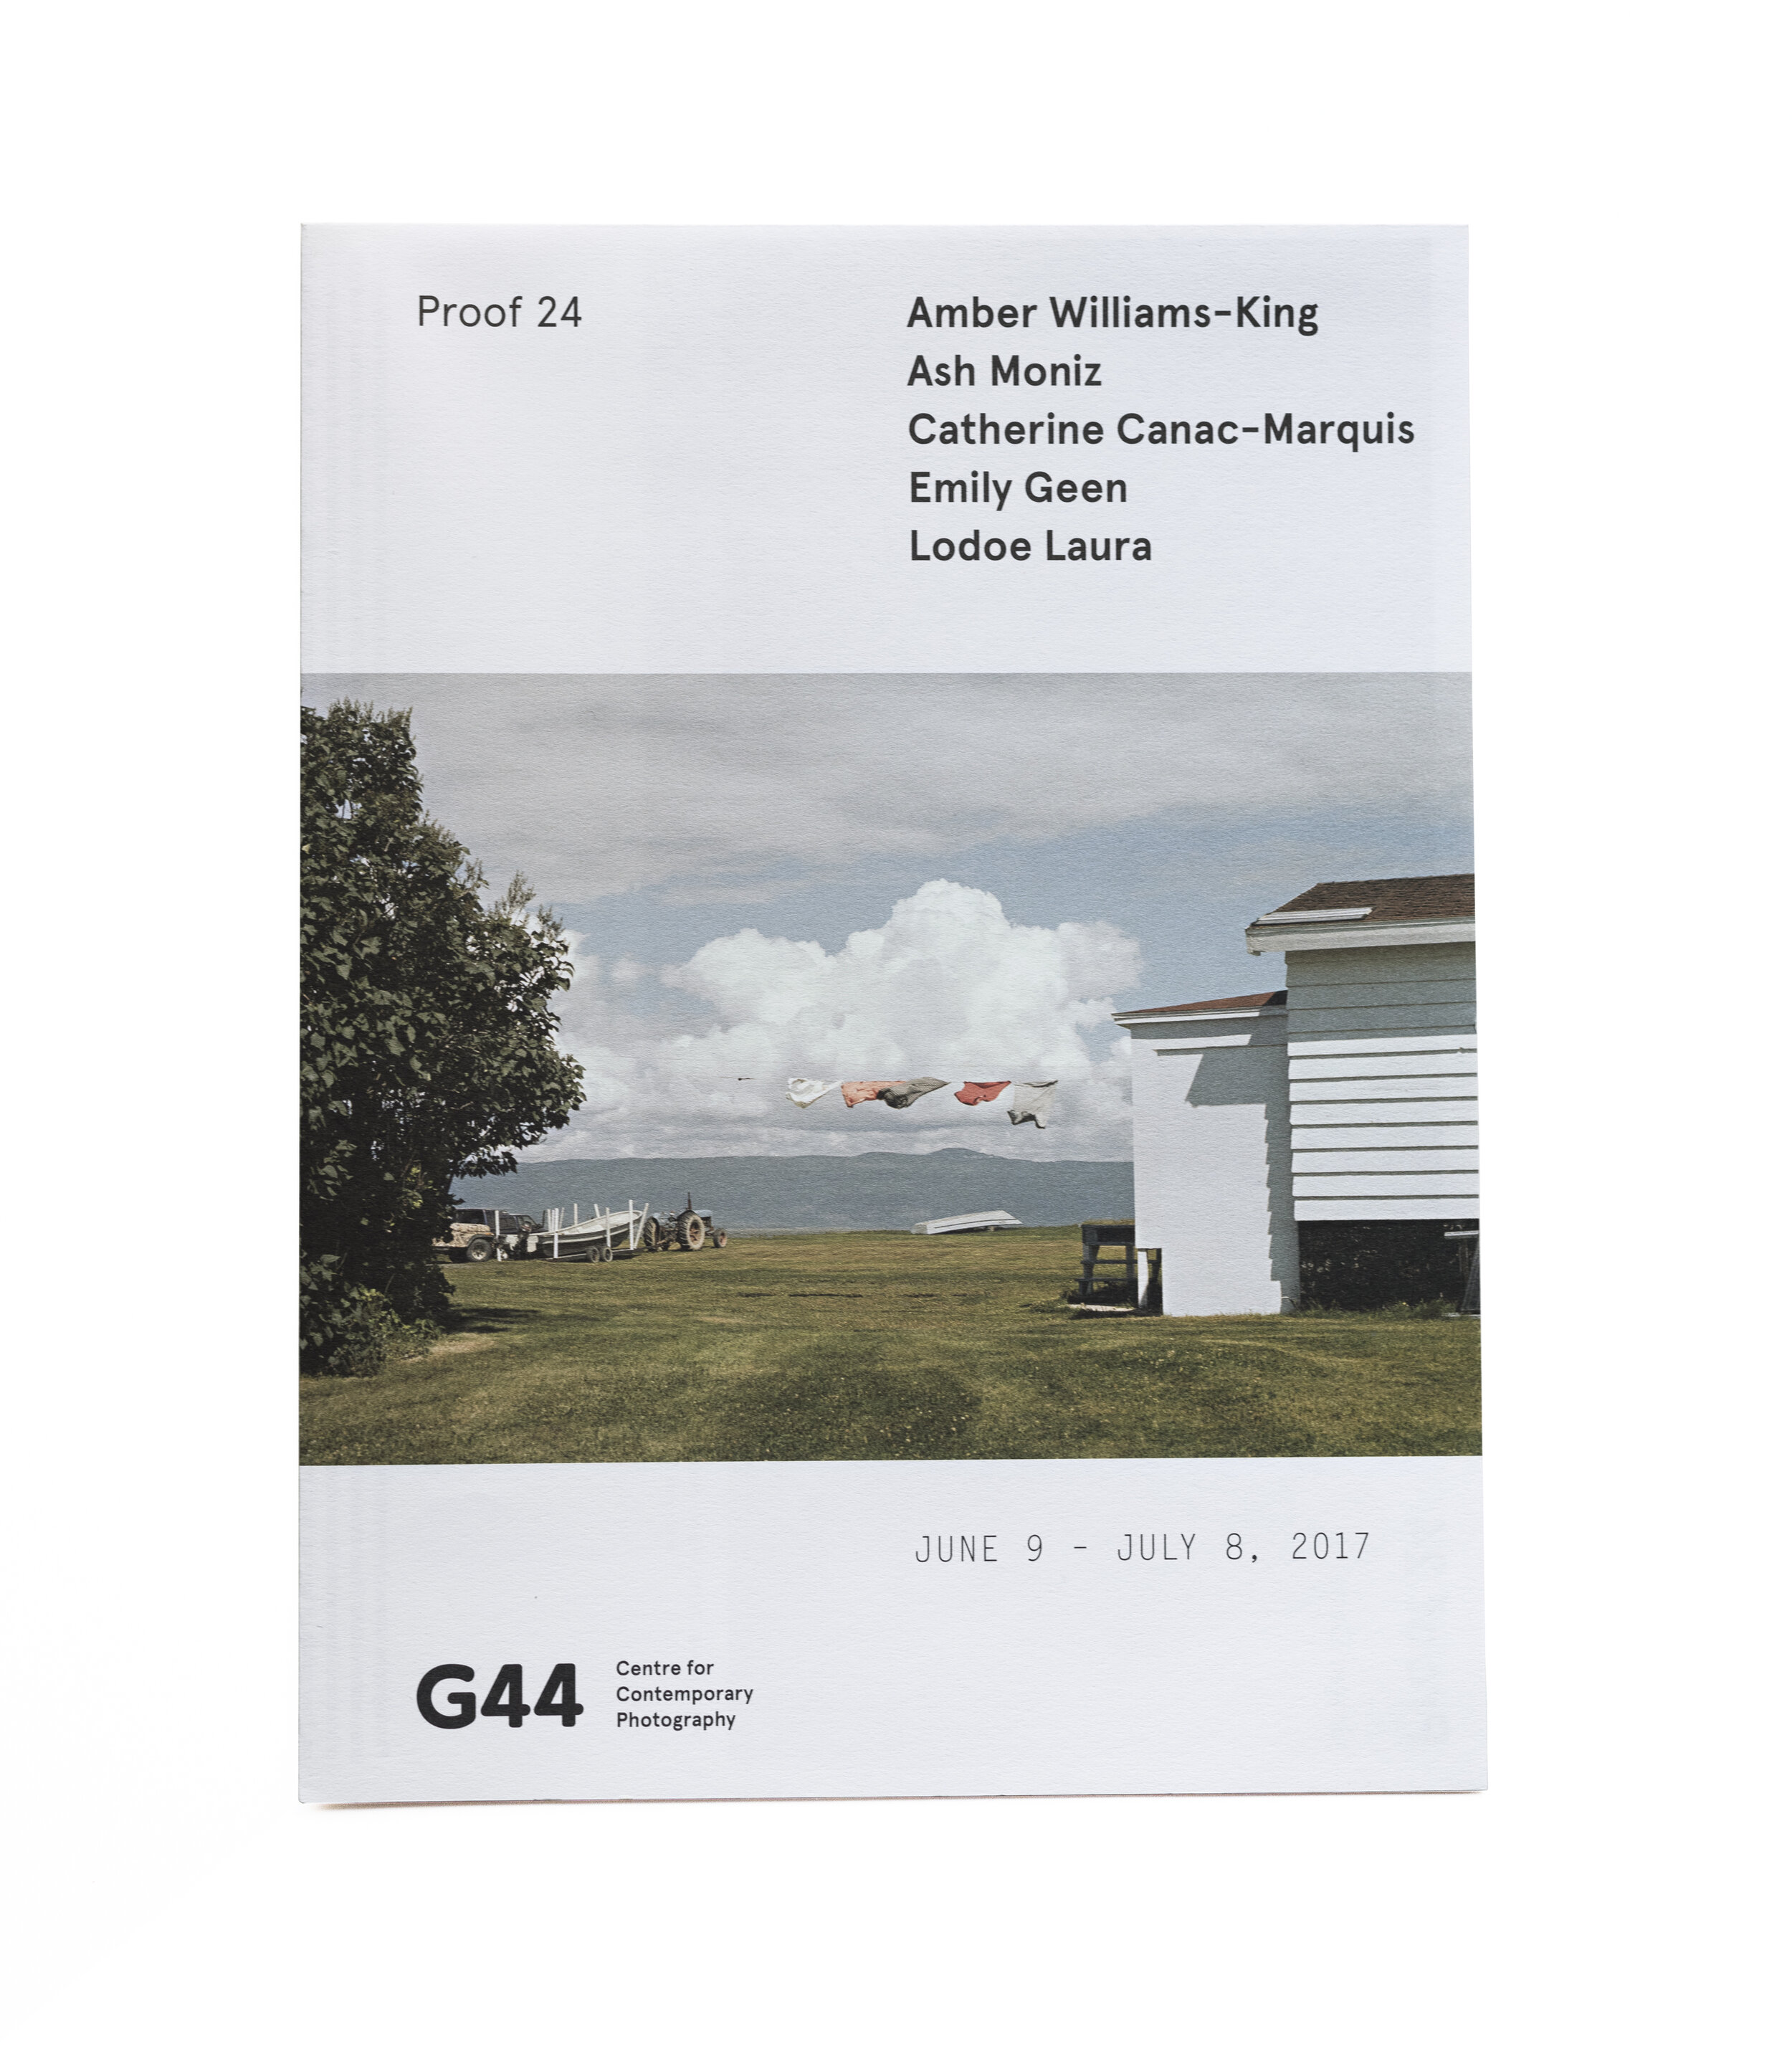  Gallery 44 | Proof 24 Exhibition Catalogue 